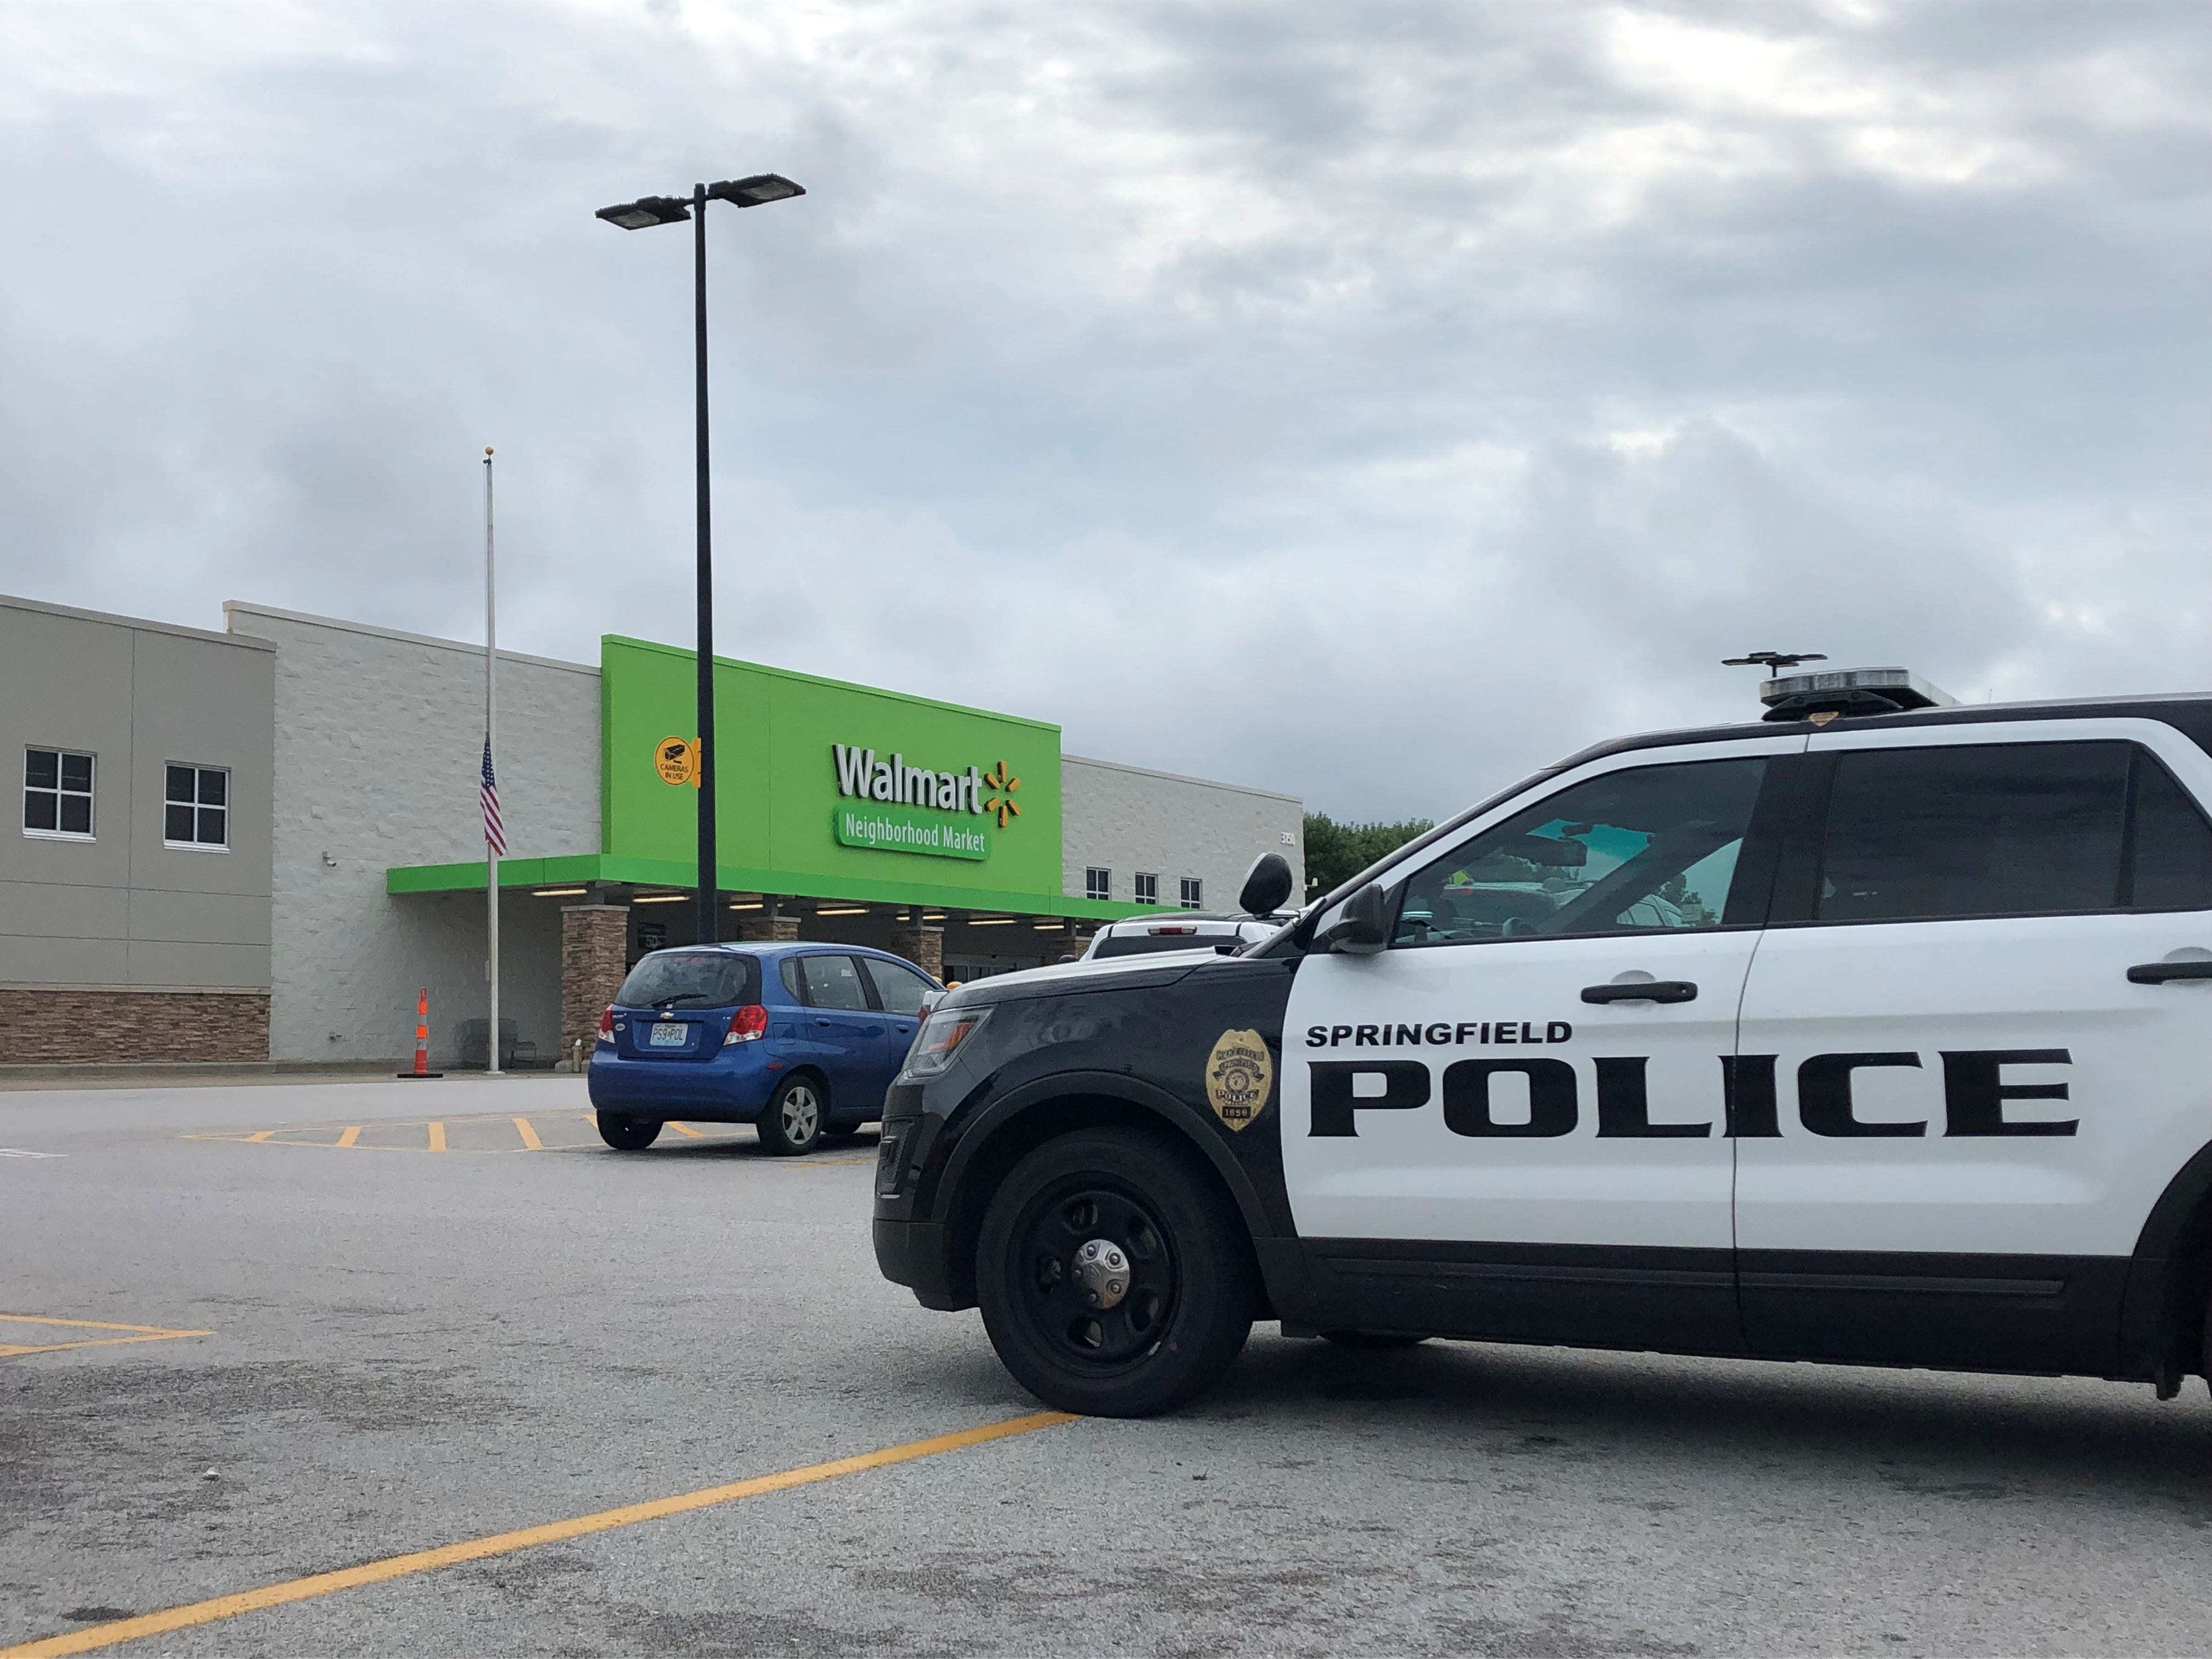 Springfield Walmart: Man with gun, body armor arrested, police say